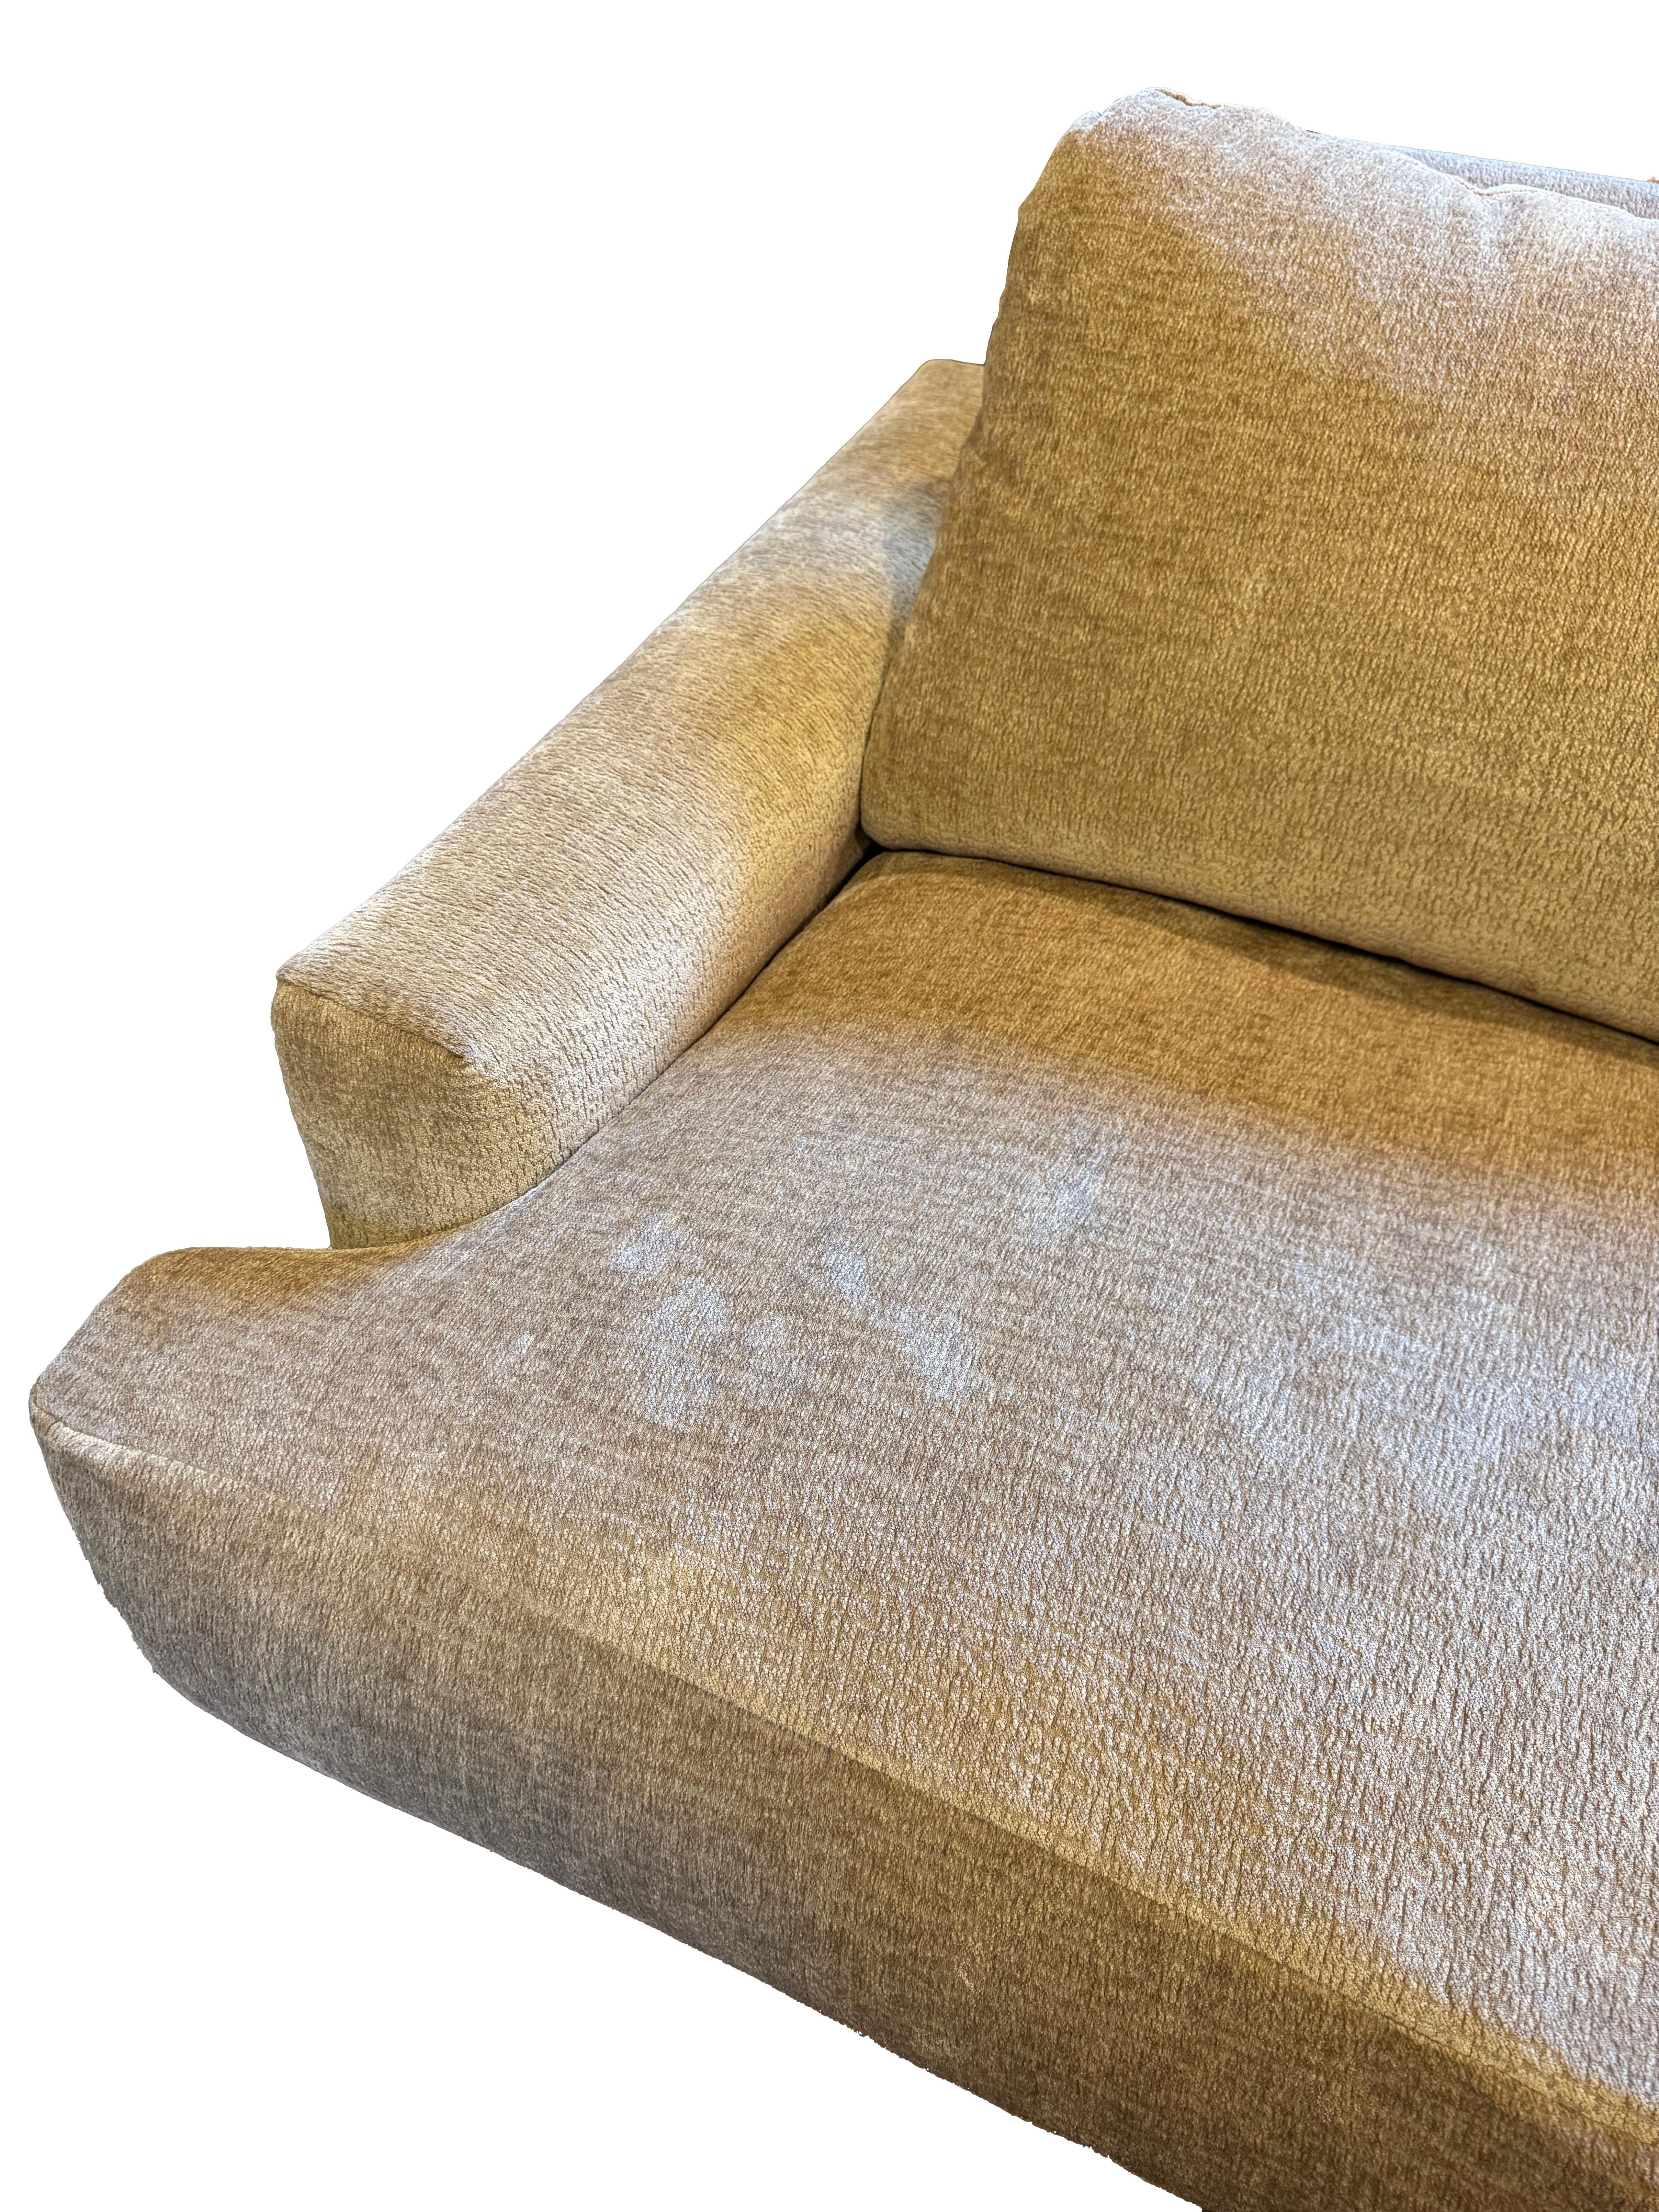 20th Century Luxurious Tan Velvet Sofa For Sale